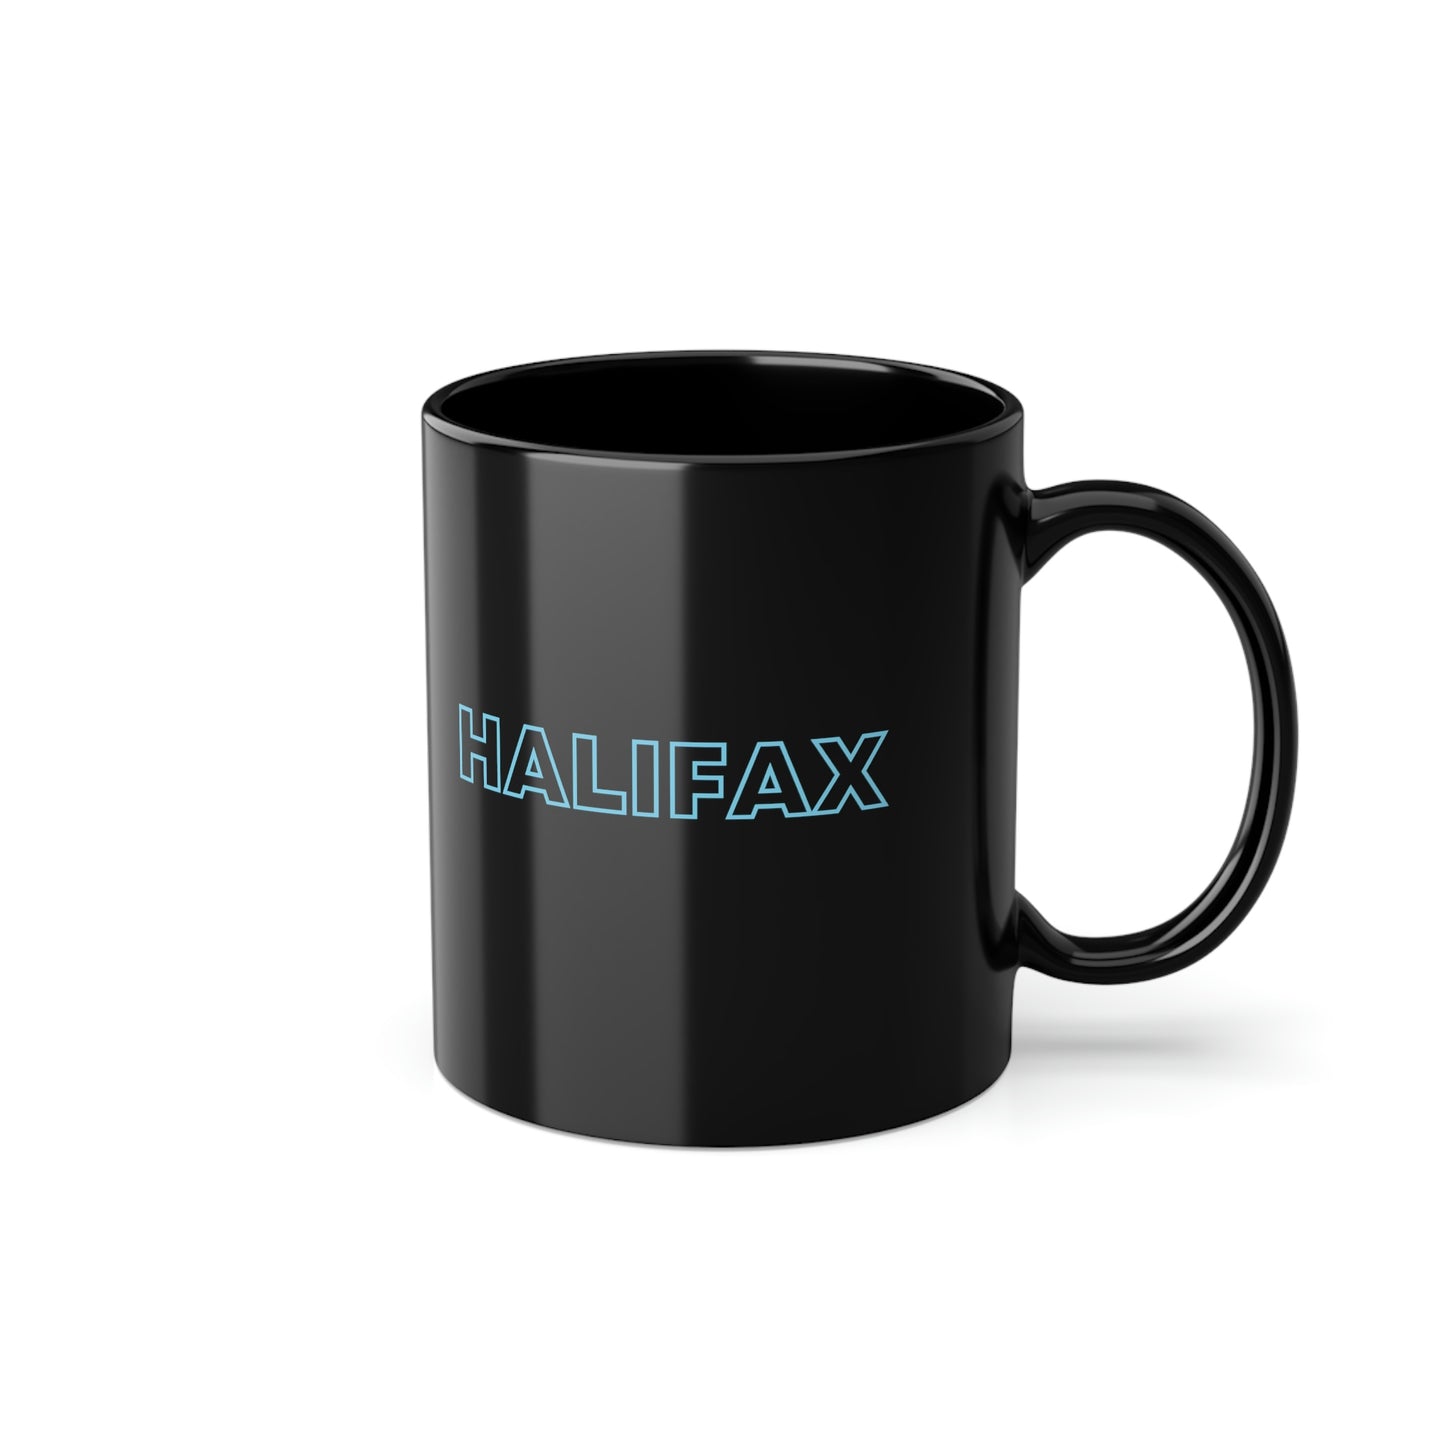 HALIFAX - CITY MUG - Black Coffee Cup, 11oz